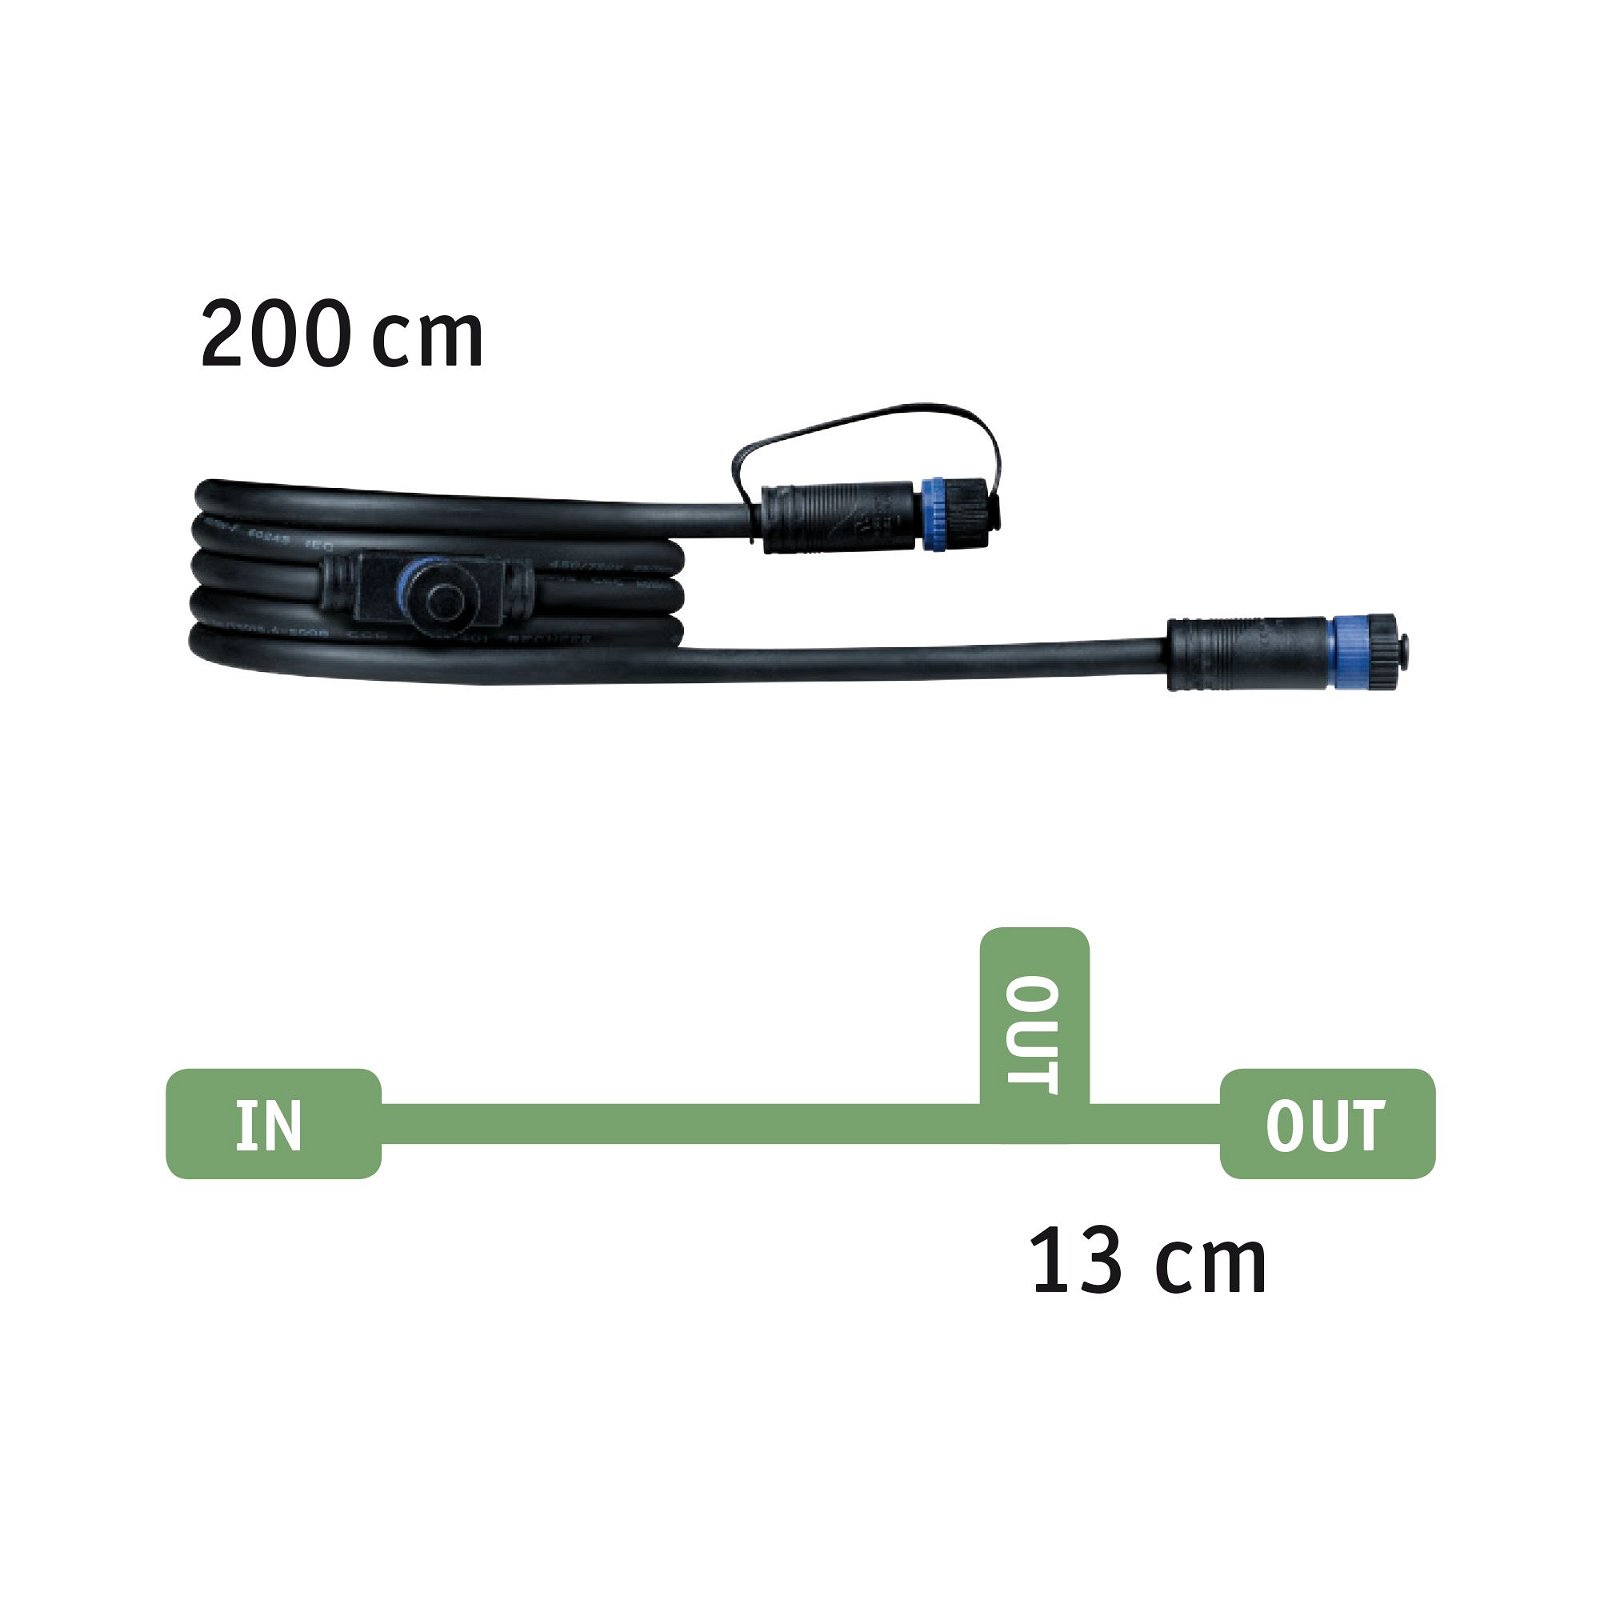 Plug & Shine Bundle LED Lichtobjekt Tree inkl. 2m-Kabel und Trafo IP67 3000K 2,8W Weiß